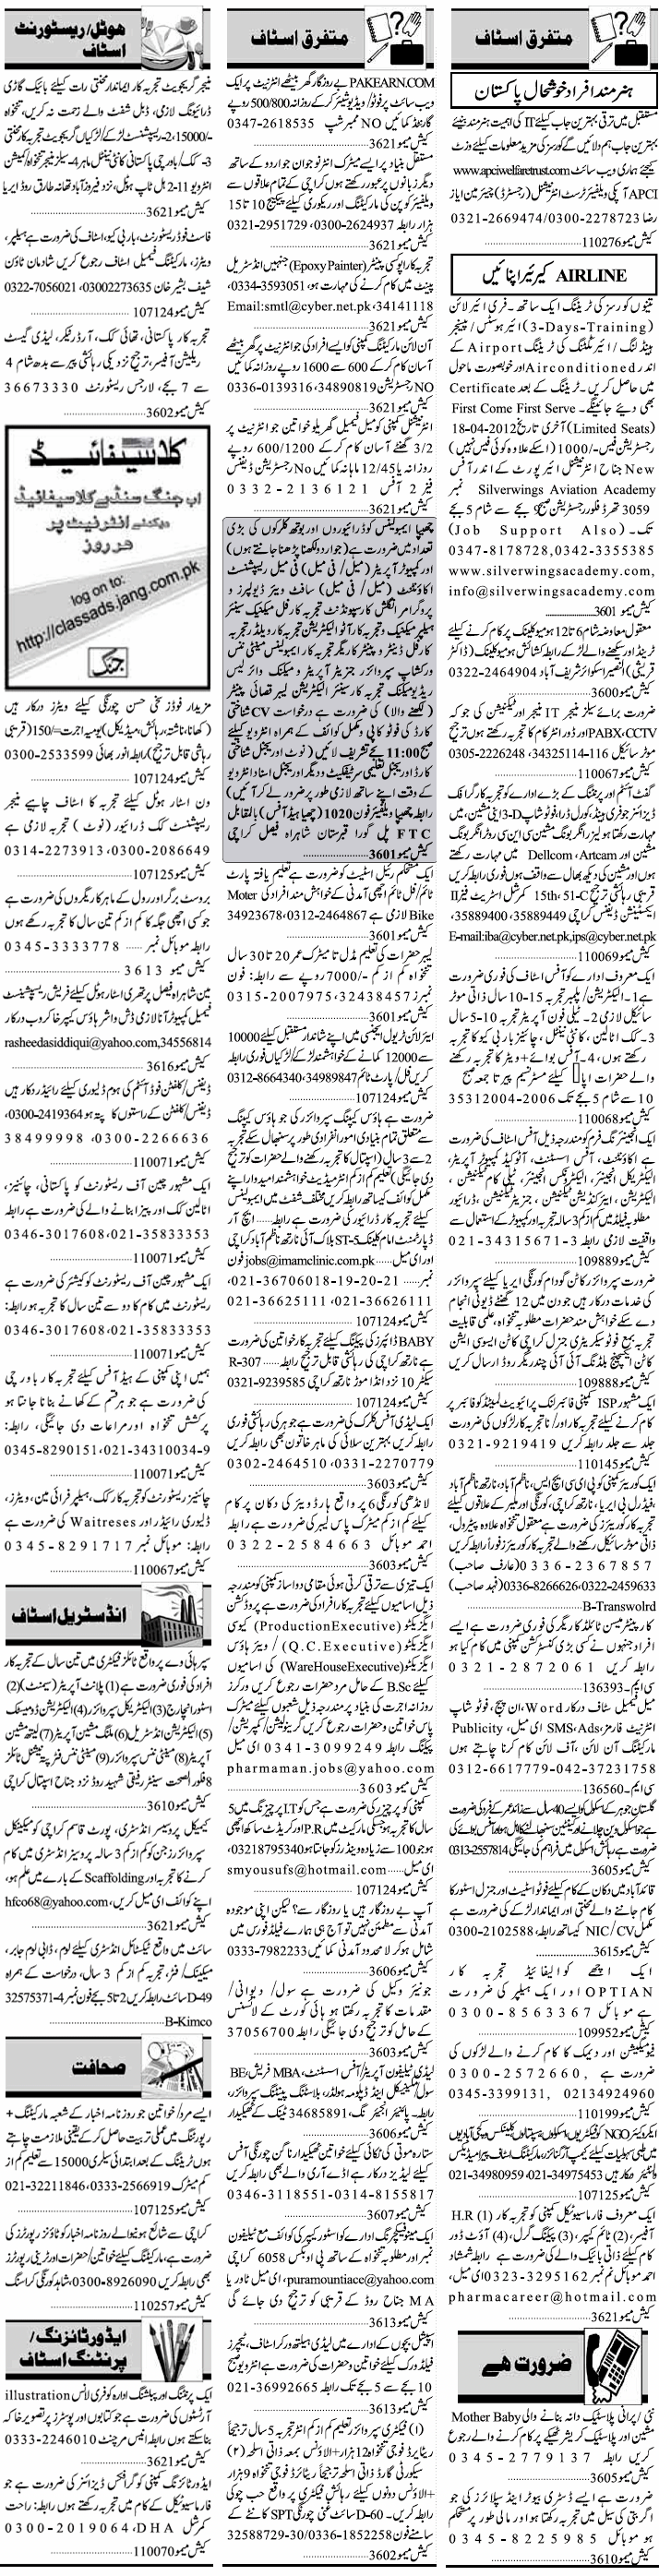 Classified Karachi Jang Misc. Jobs 9